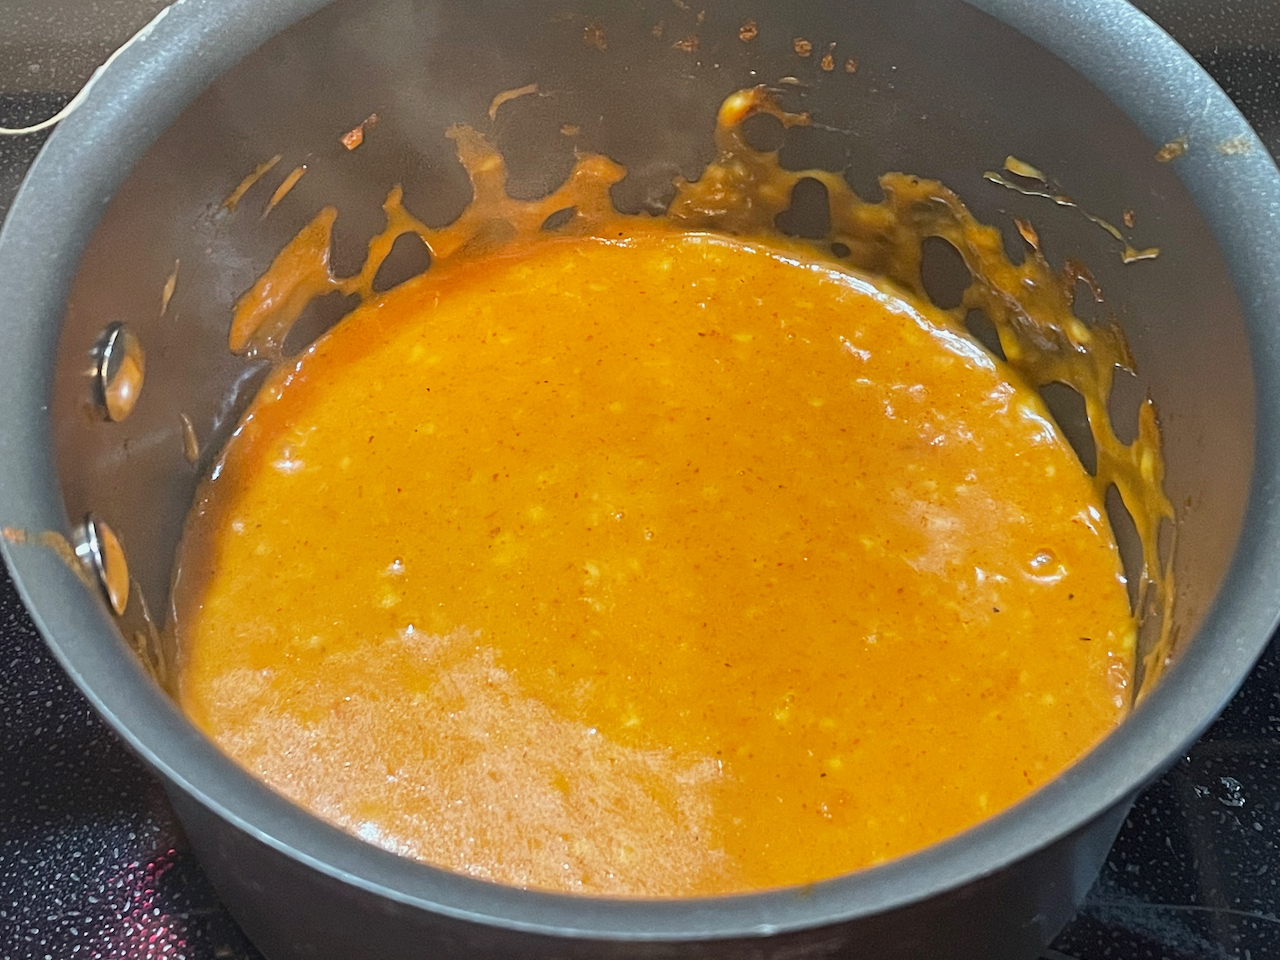 Orange colored sauce in a black pot.